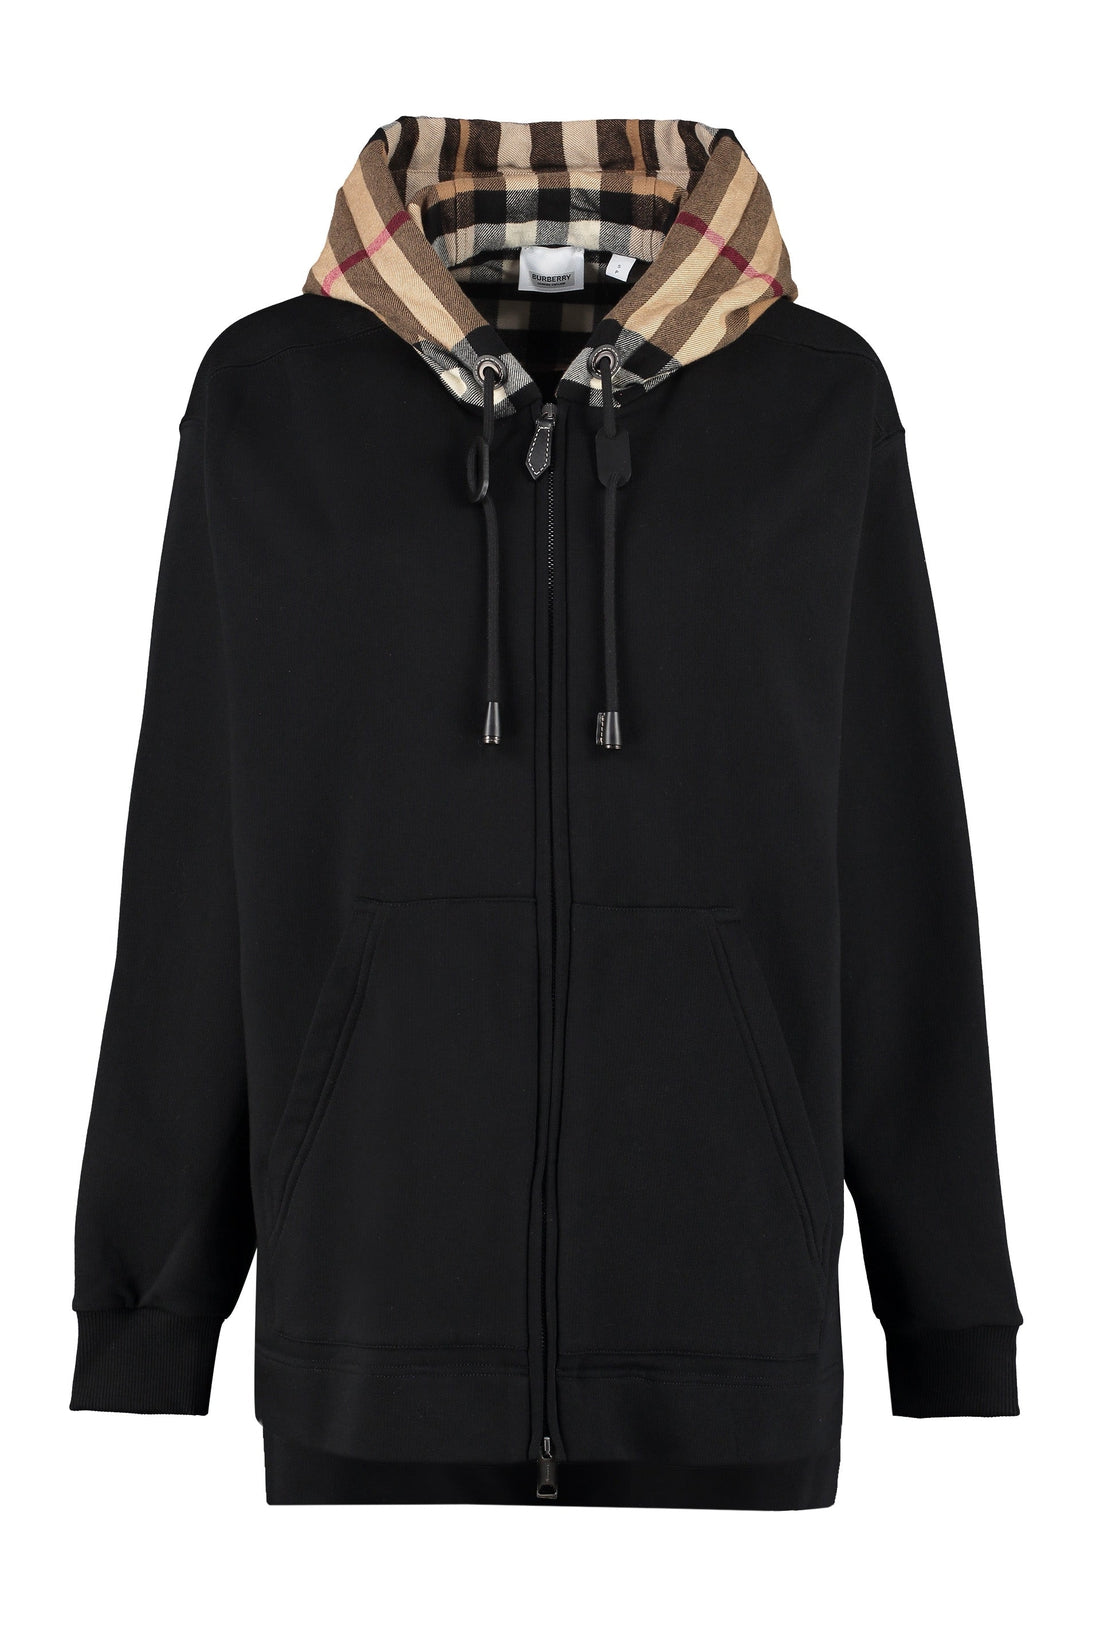 Burberry-OUTLET-SALE-Cotton full zip hoodie-ARCHIVIST